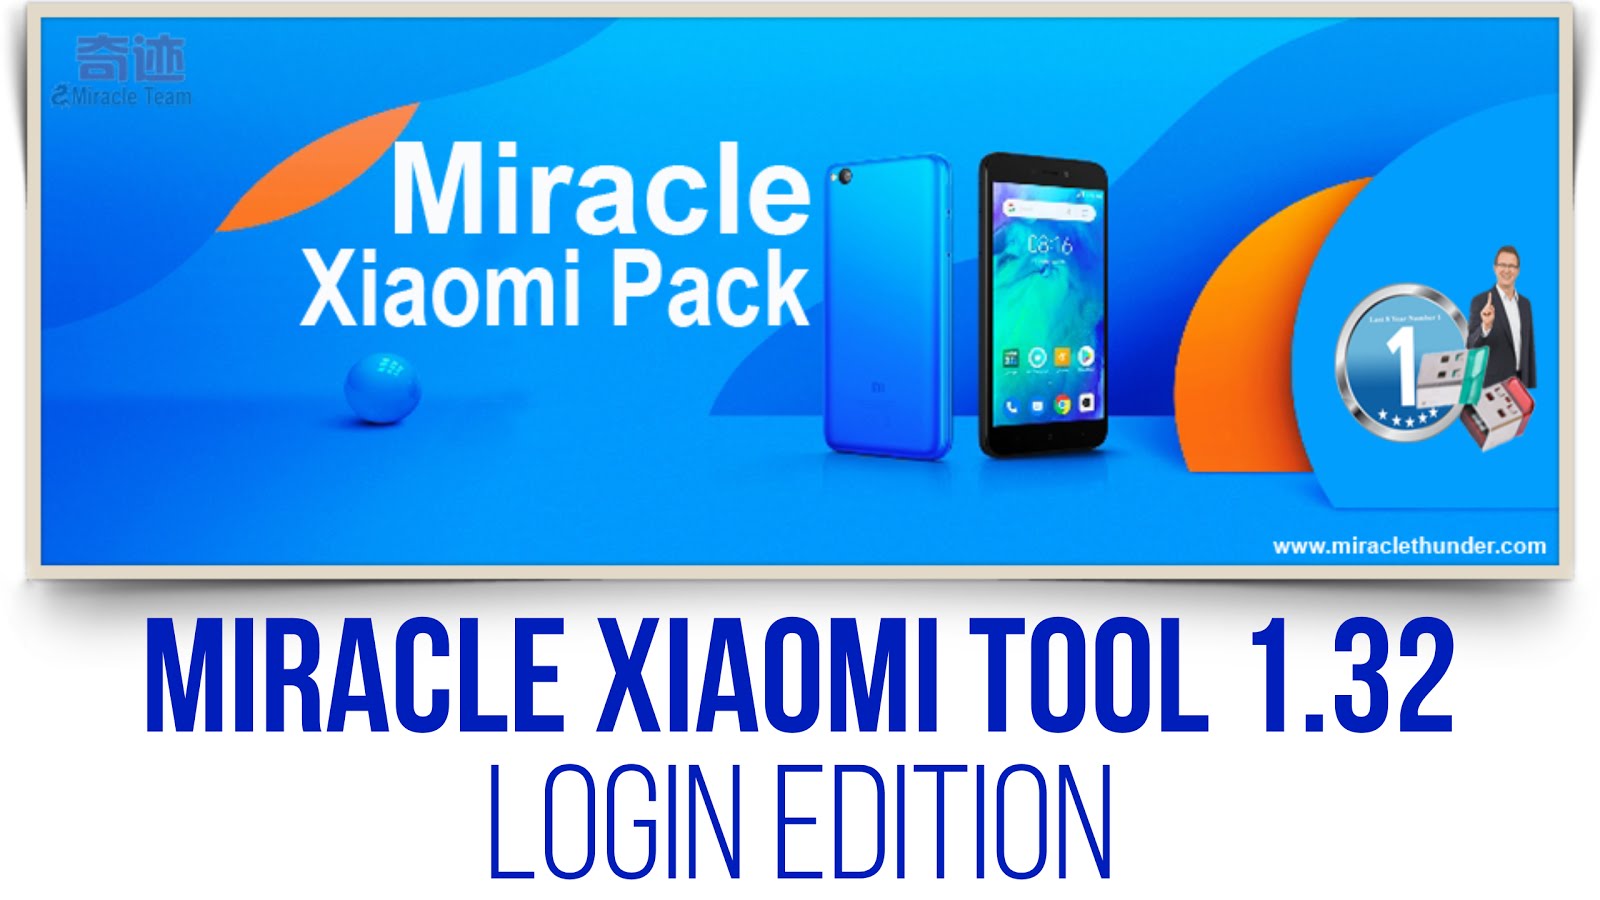 Xiaomi Utility Tool. Miracle Xiaomi Tool 1.8. Xiaomi Pro Tool. Miracle xiaomi tool